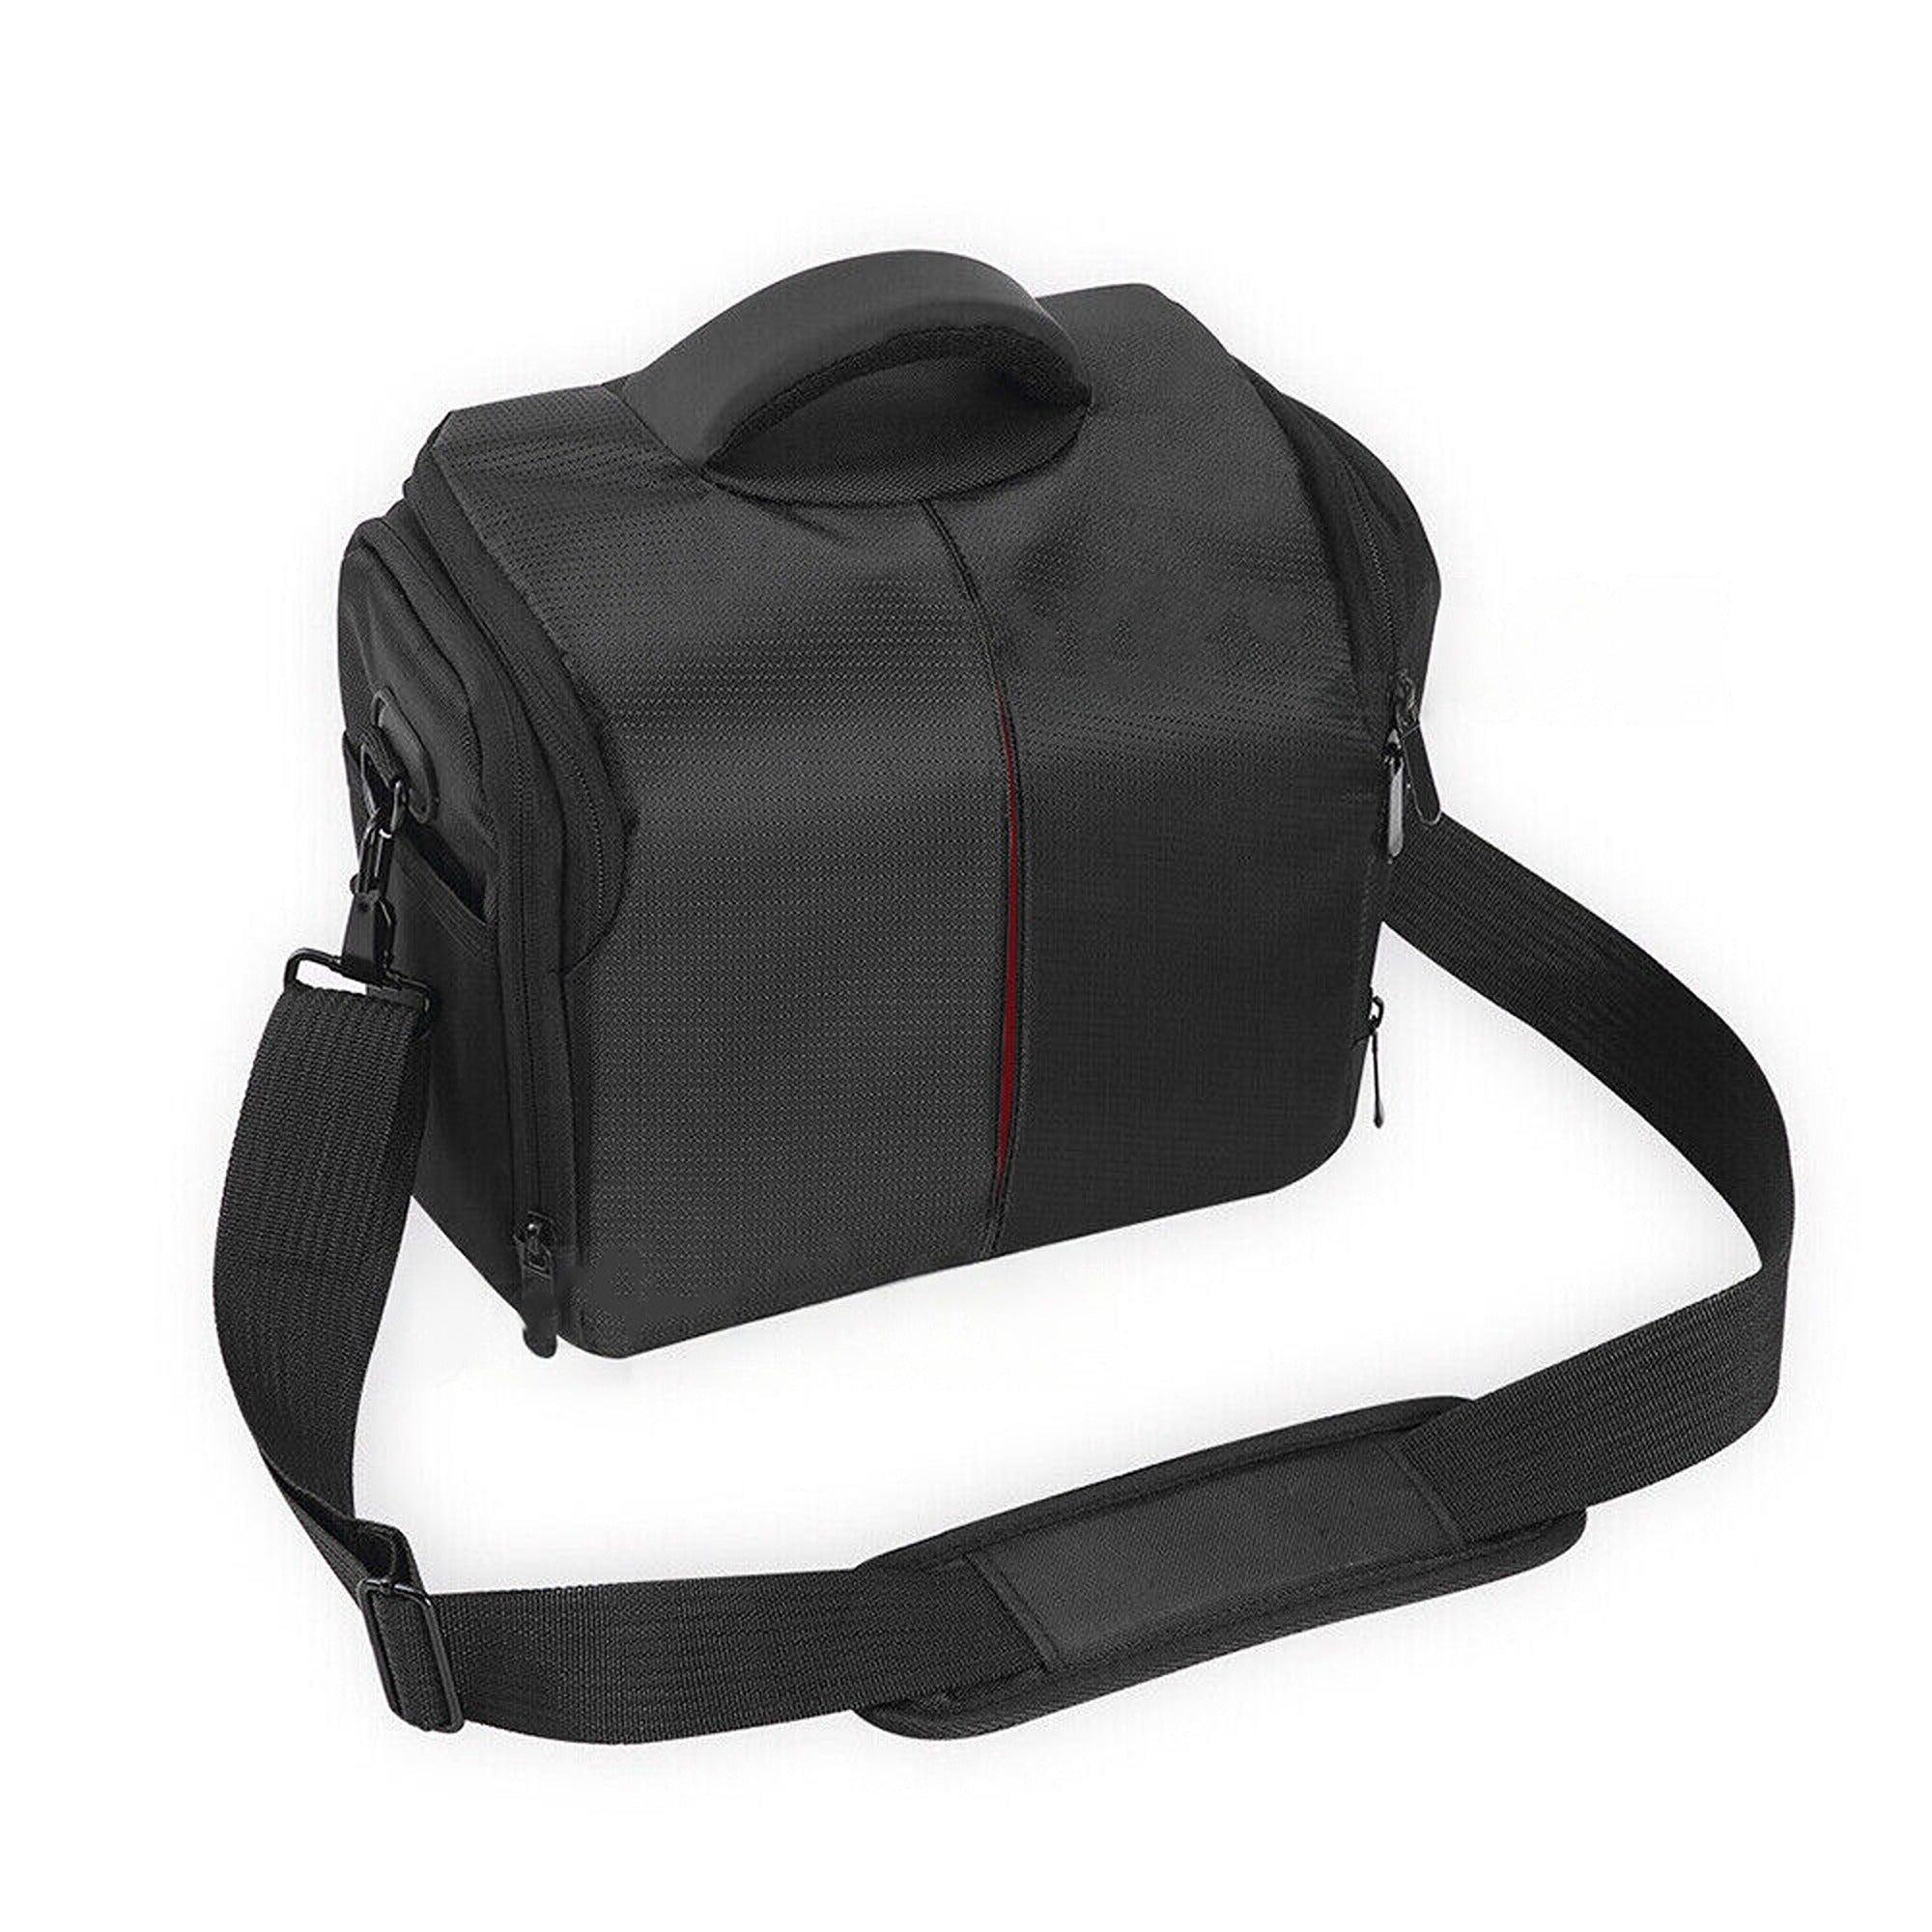 Waterproof Travel Universal Carry Case Bag For Sony Nikon SLR DSLR Lens Camera